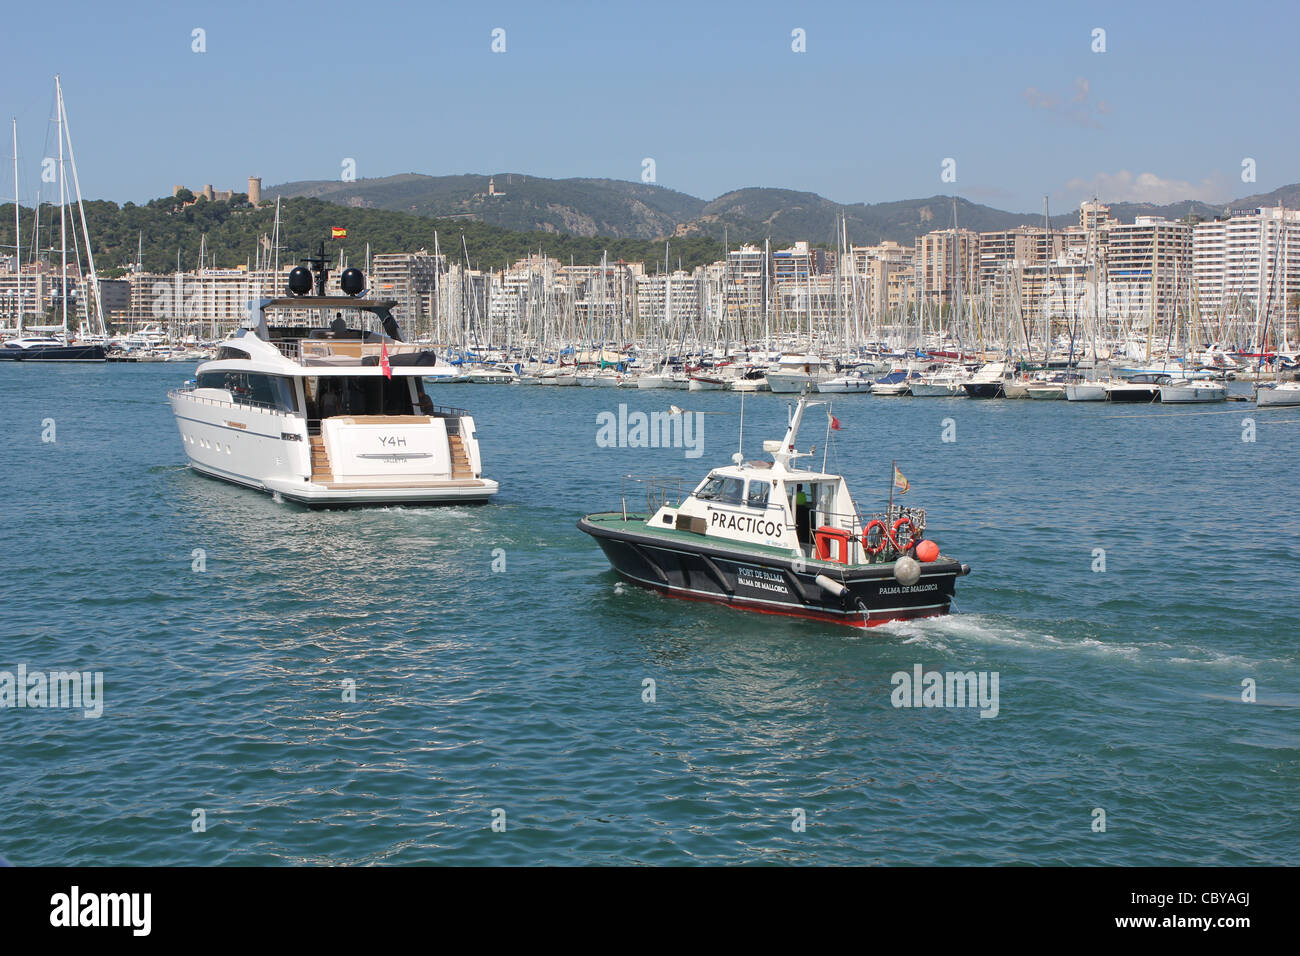 Scene in the Port of Palma de Mallorca - Practicos / Marine pilot launch following Sanlorenzo SL104 luxury superyacht Stock Photo